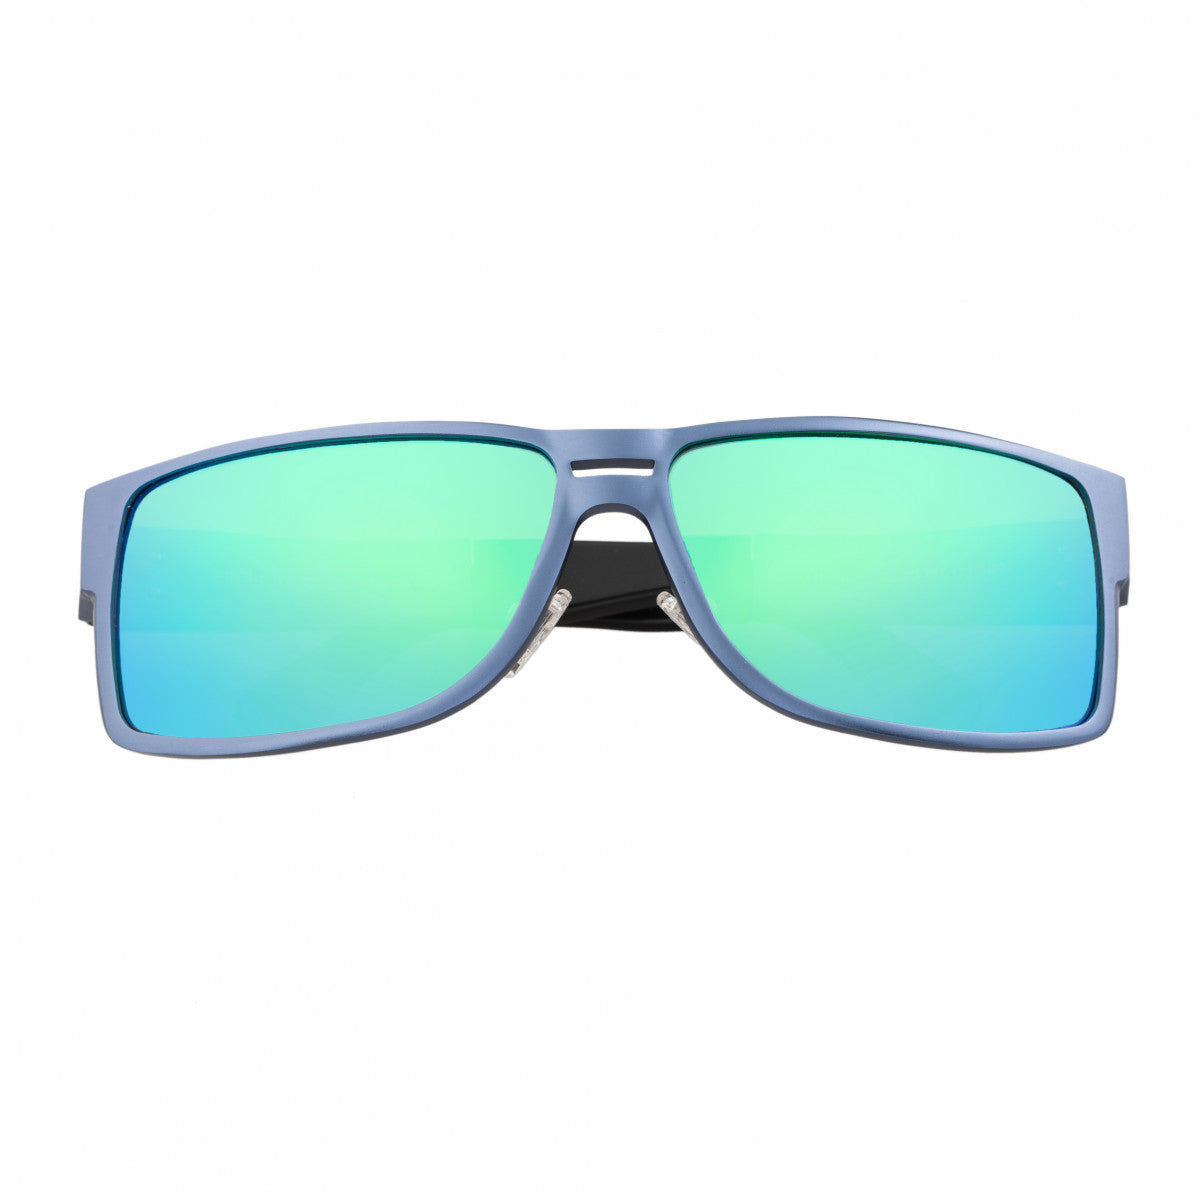 Breed Stratus Aluminium Polarized Sunglasses - Blue/Green - BSG010BL